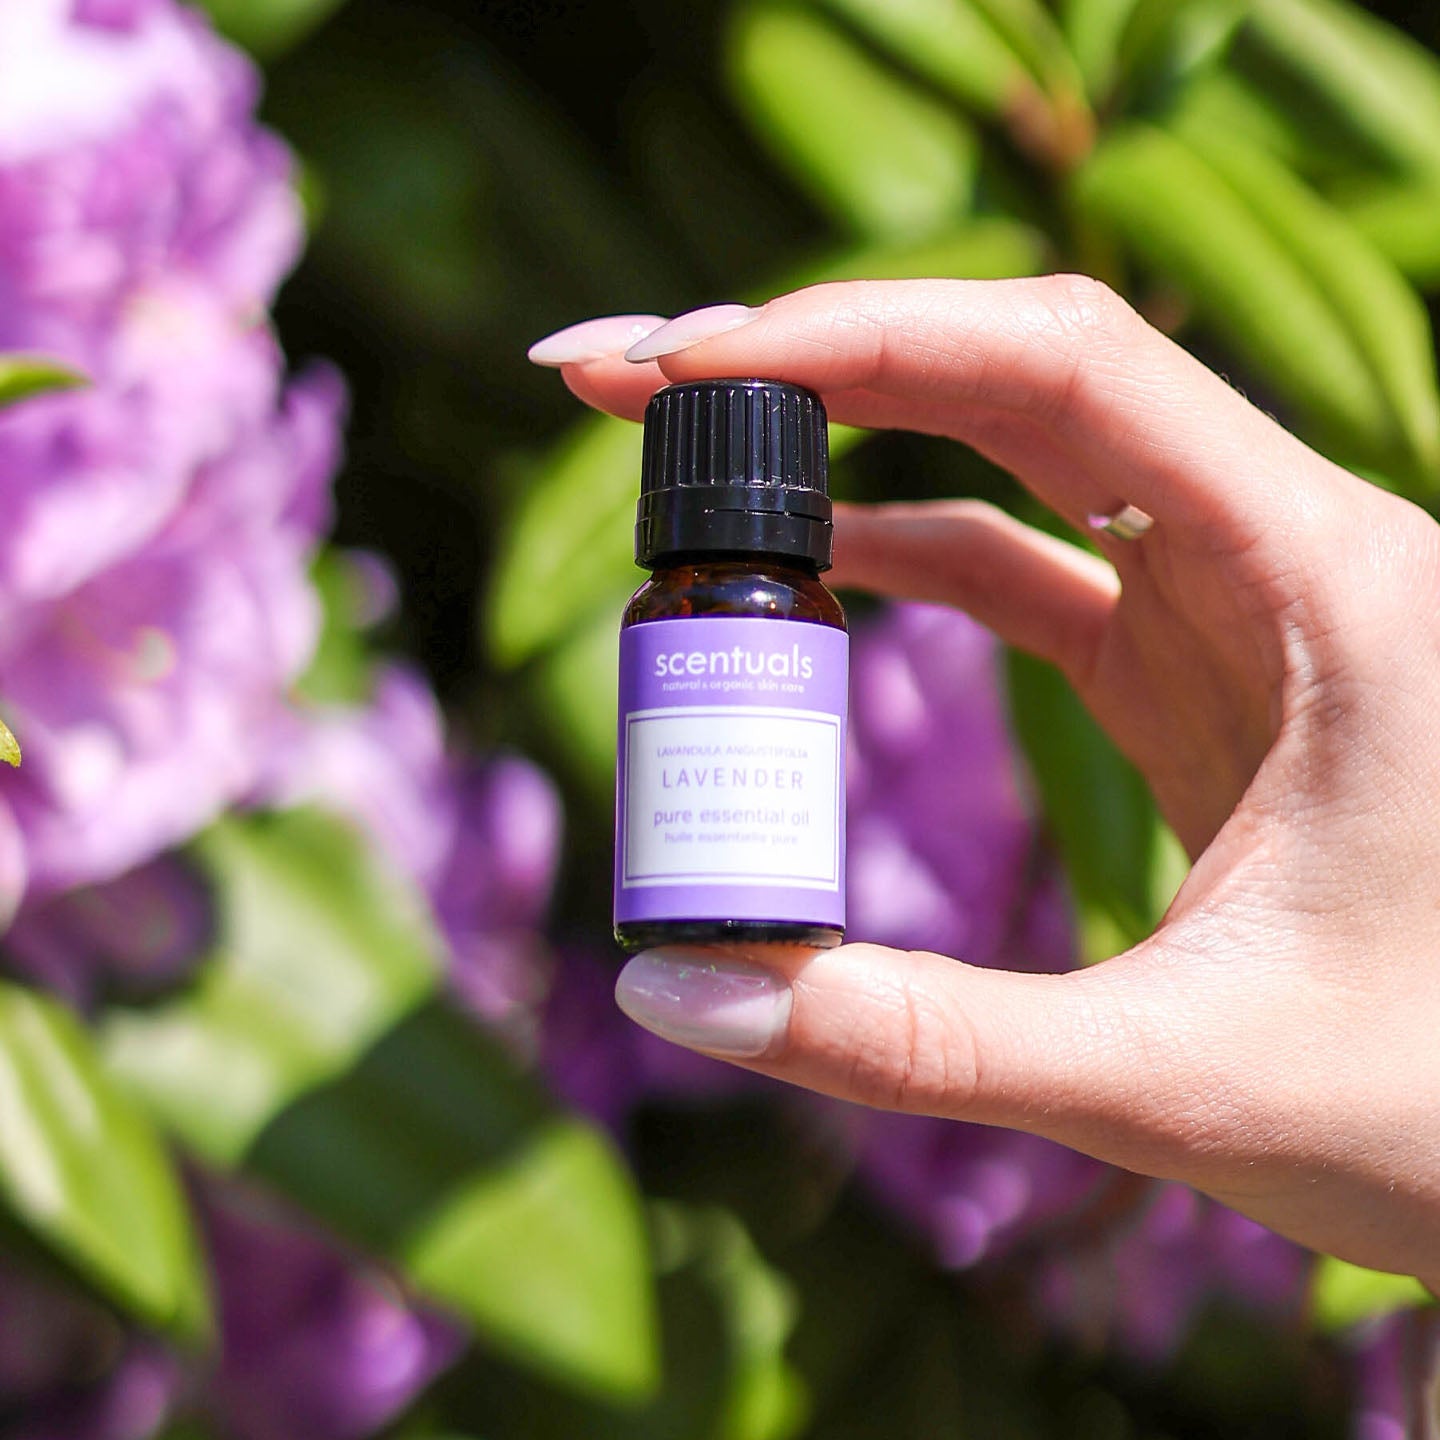 Lavender Essential Oil  Scentuals Natural & Organic Skin Care